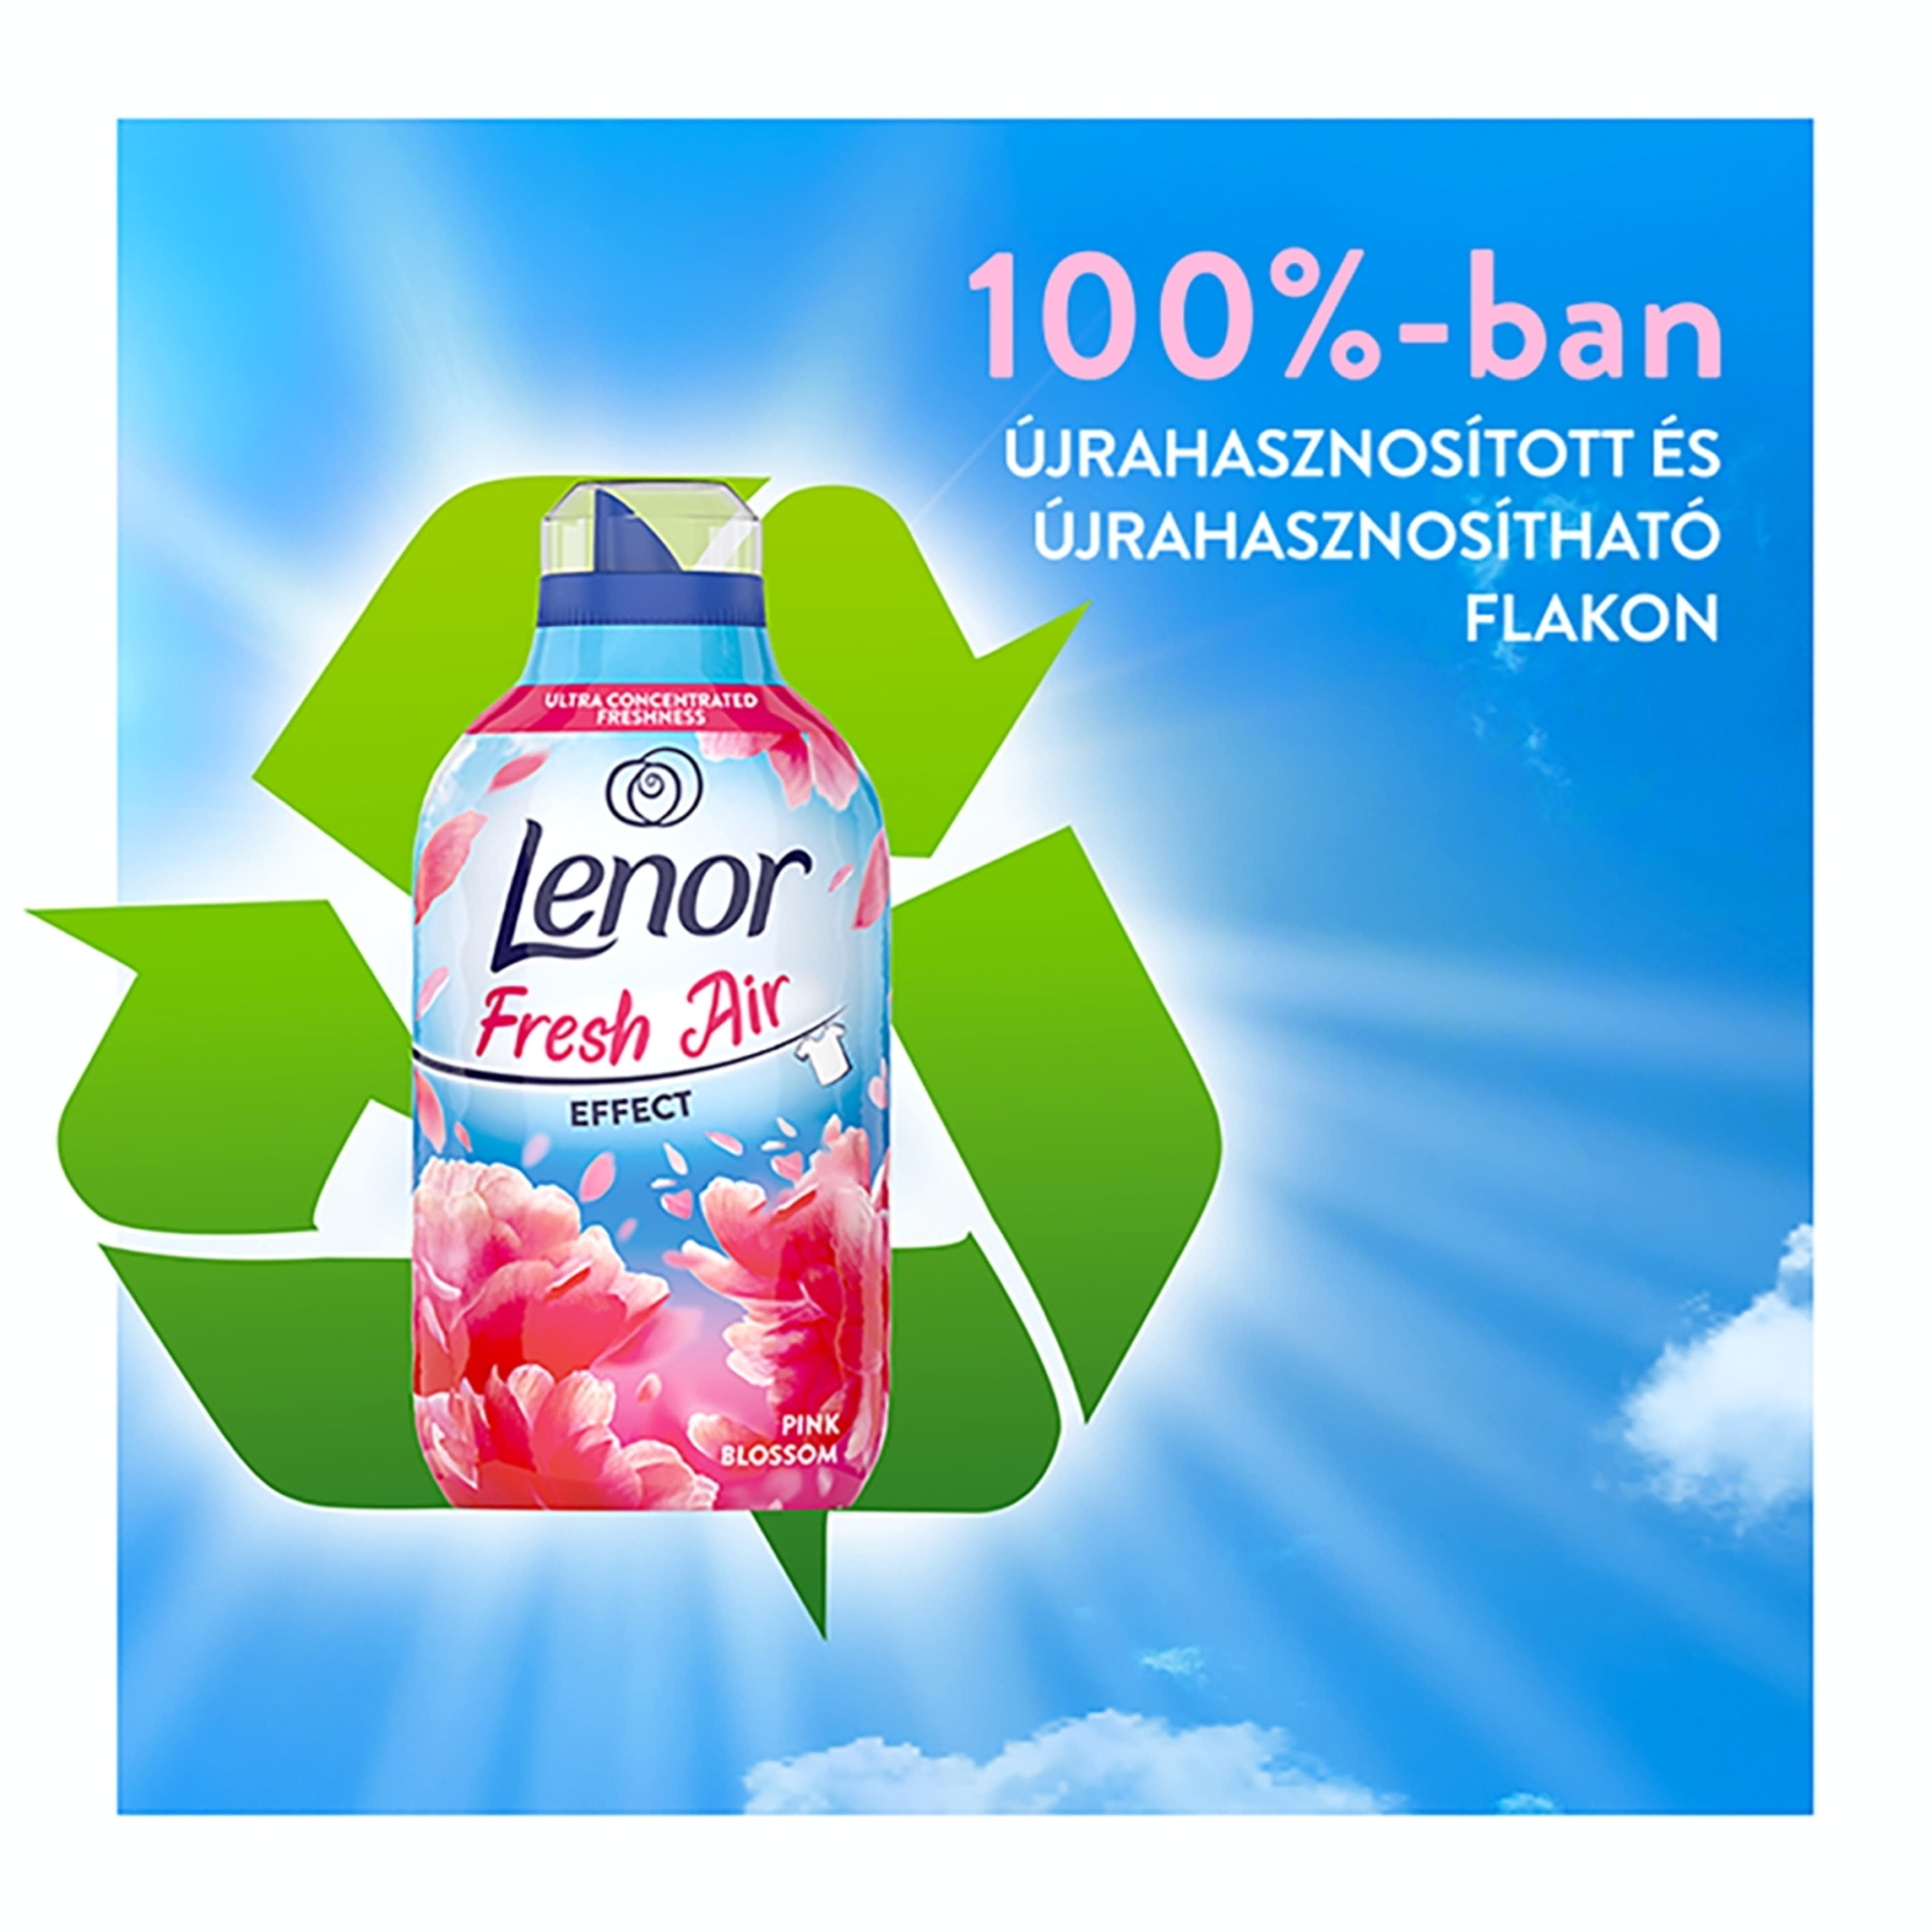 Lenor Fresh Air Effect Pink Blossom öblítő 33 mosáshoz - 462 ml-5